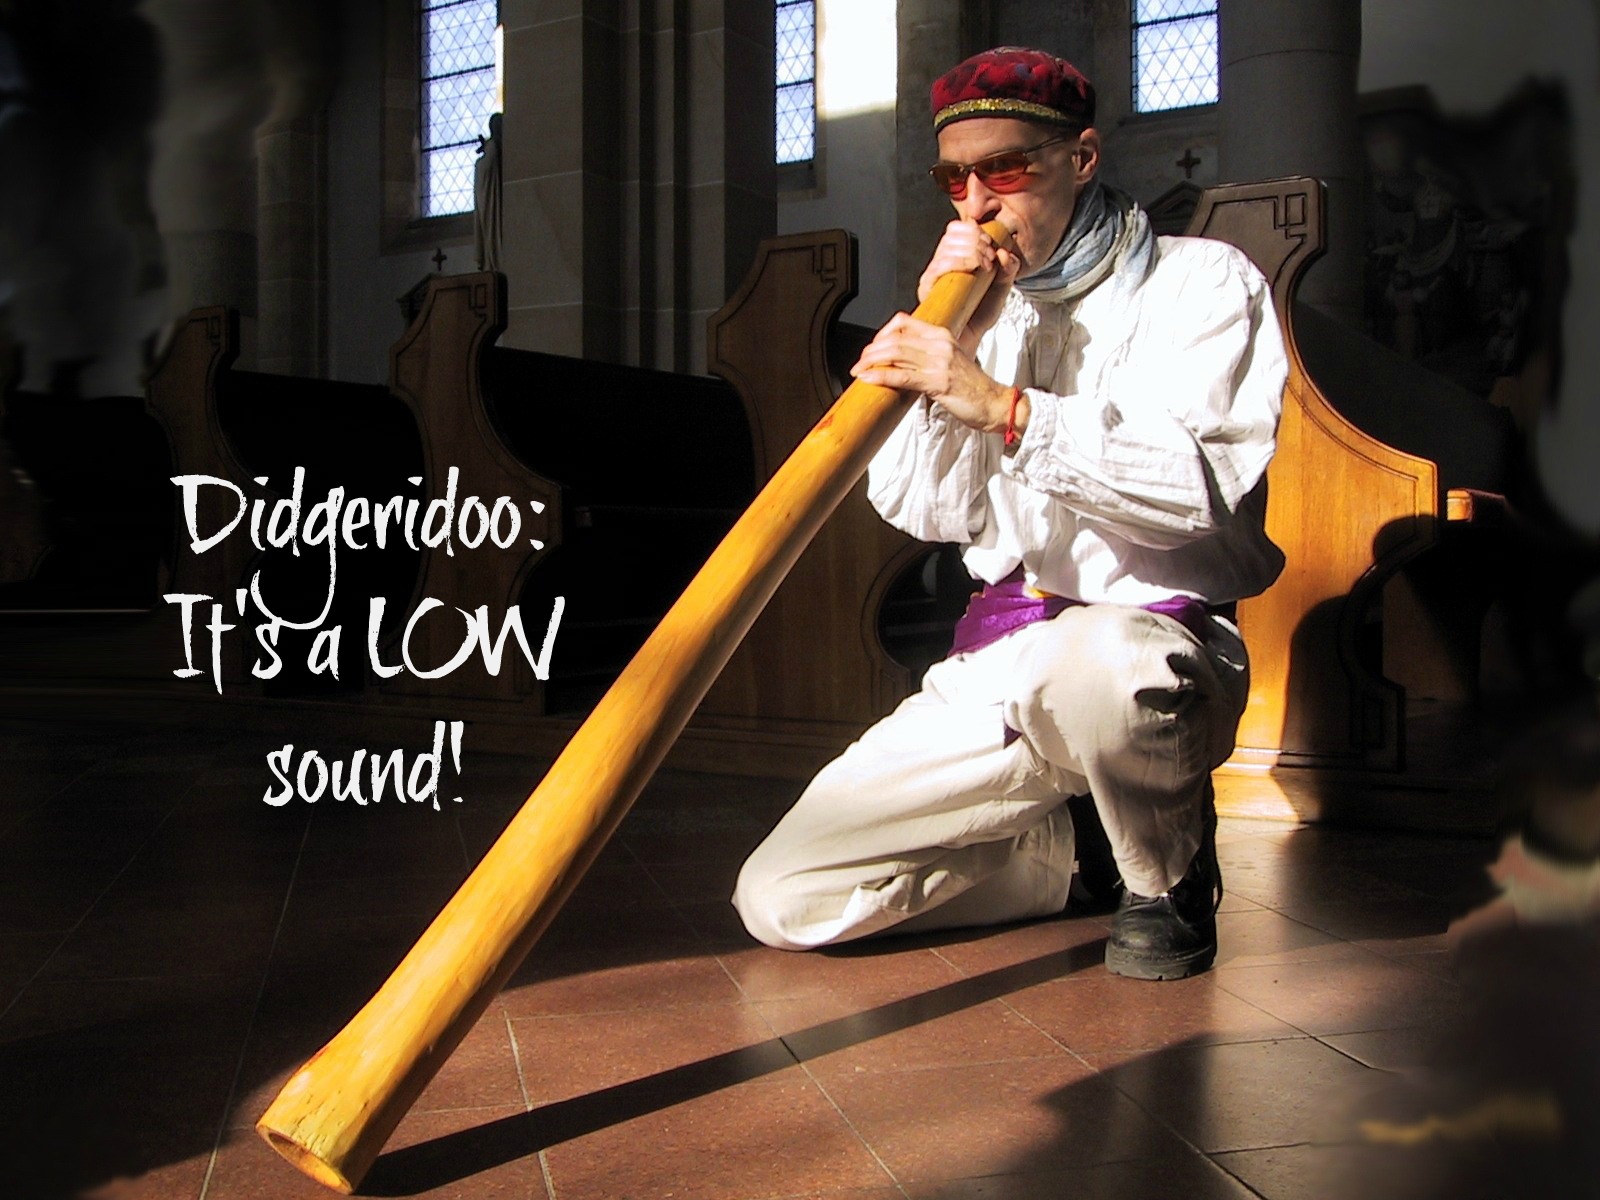 The Australian Didgeridoo Brings High & Fun to the Montessori Music Room! | Movement Company: Carolyn's blog